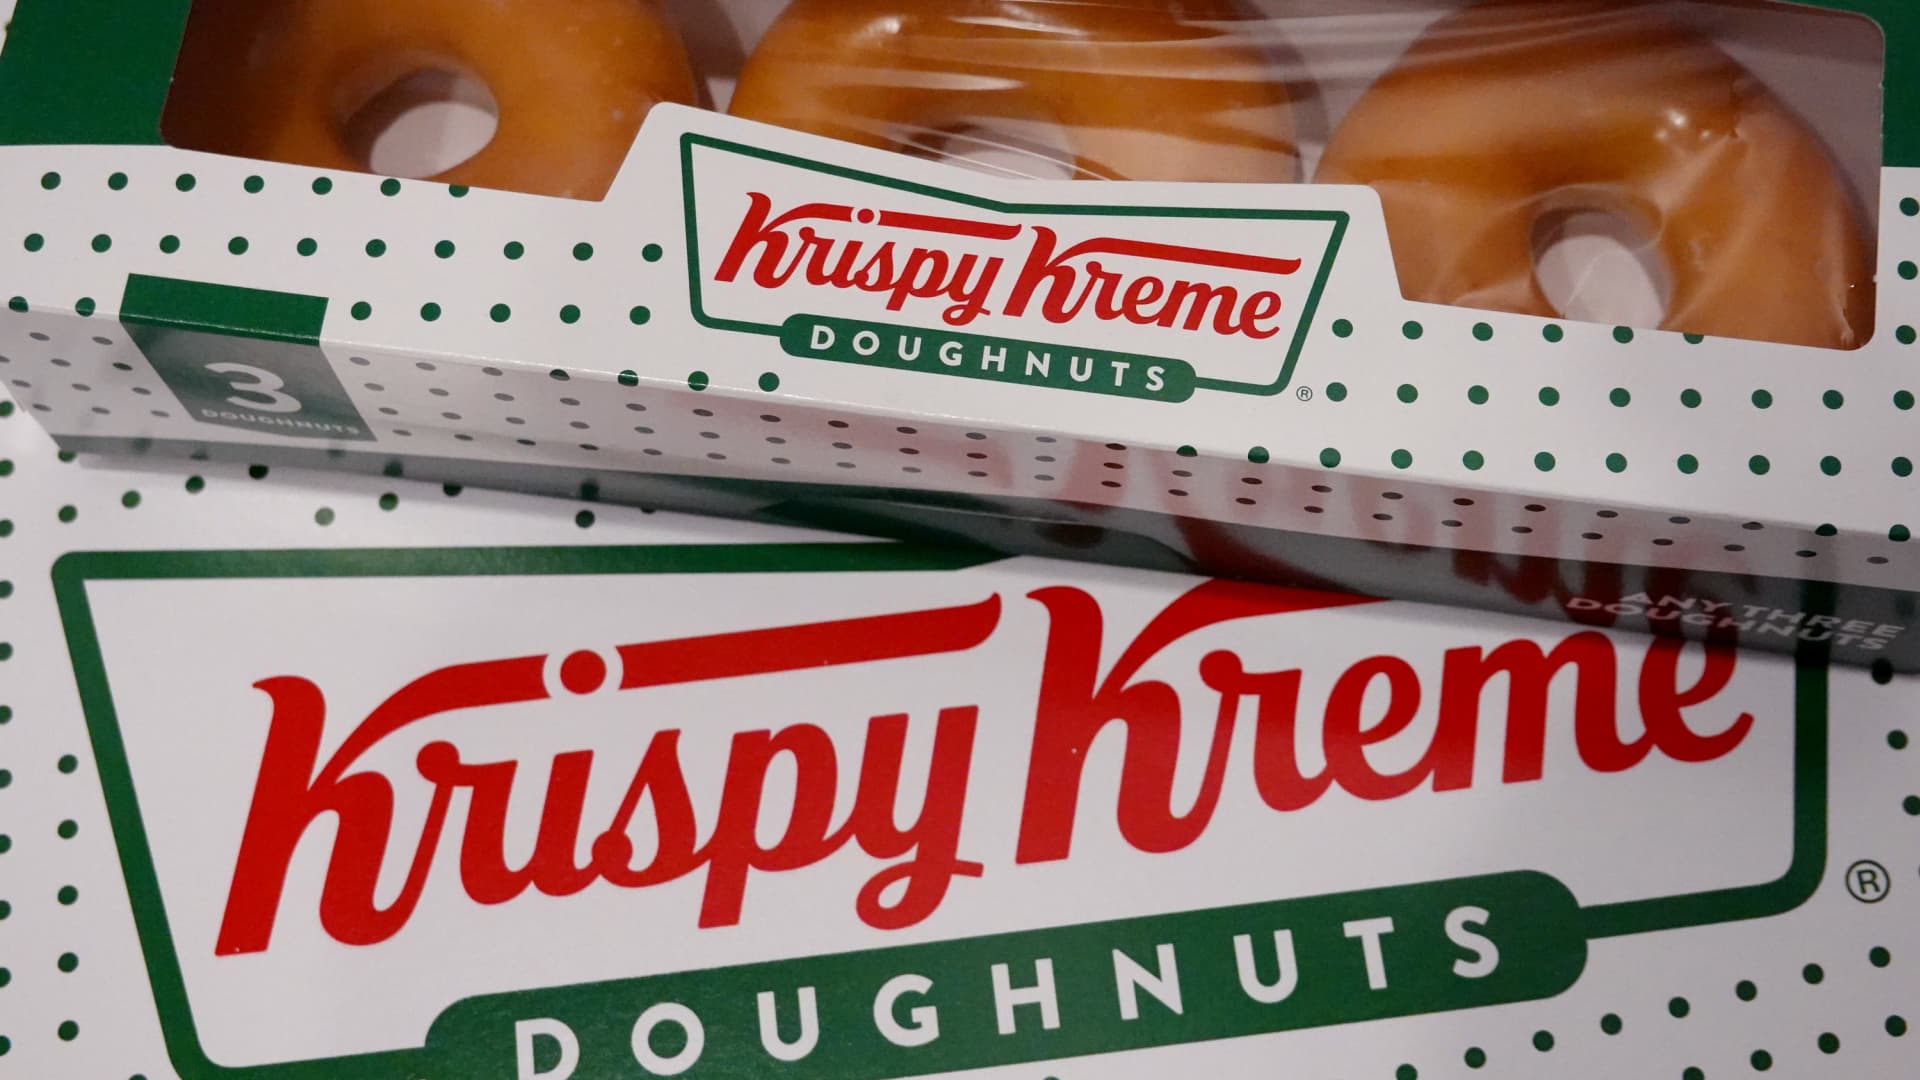 McDonald’s and Krispy Kreme are in talks to expand partnership